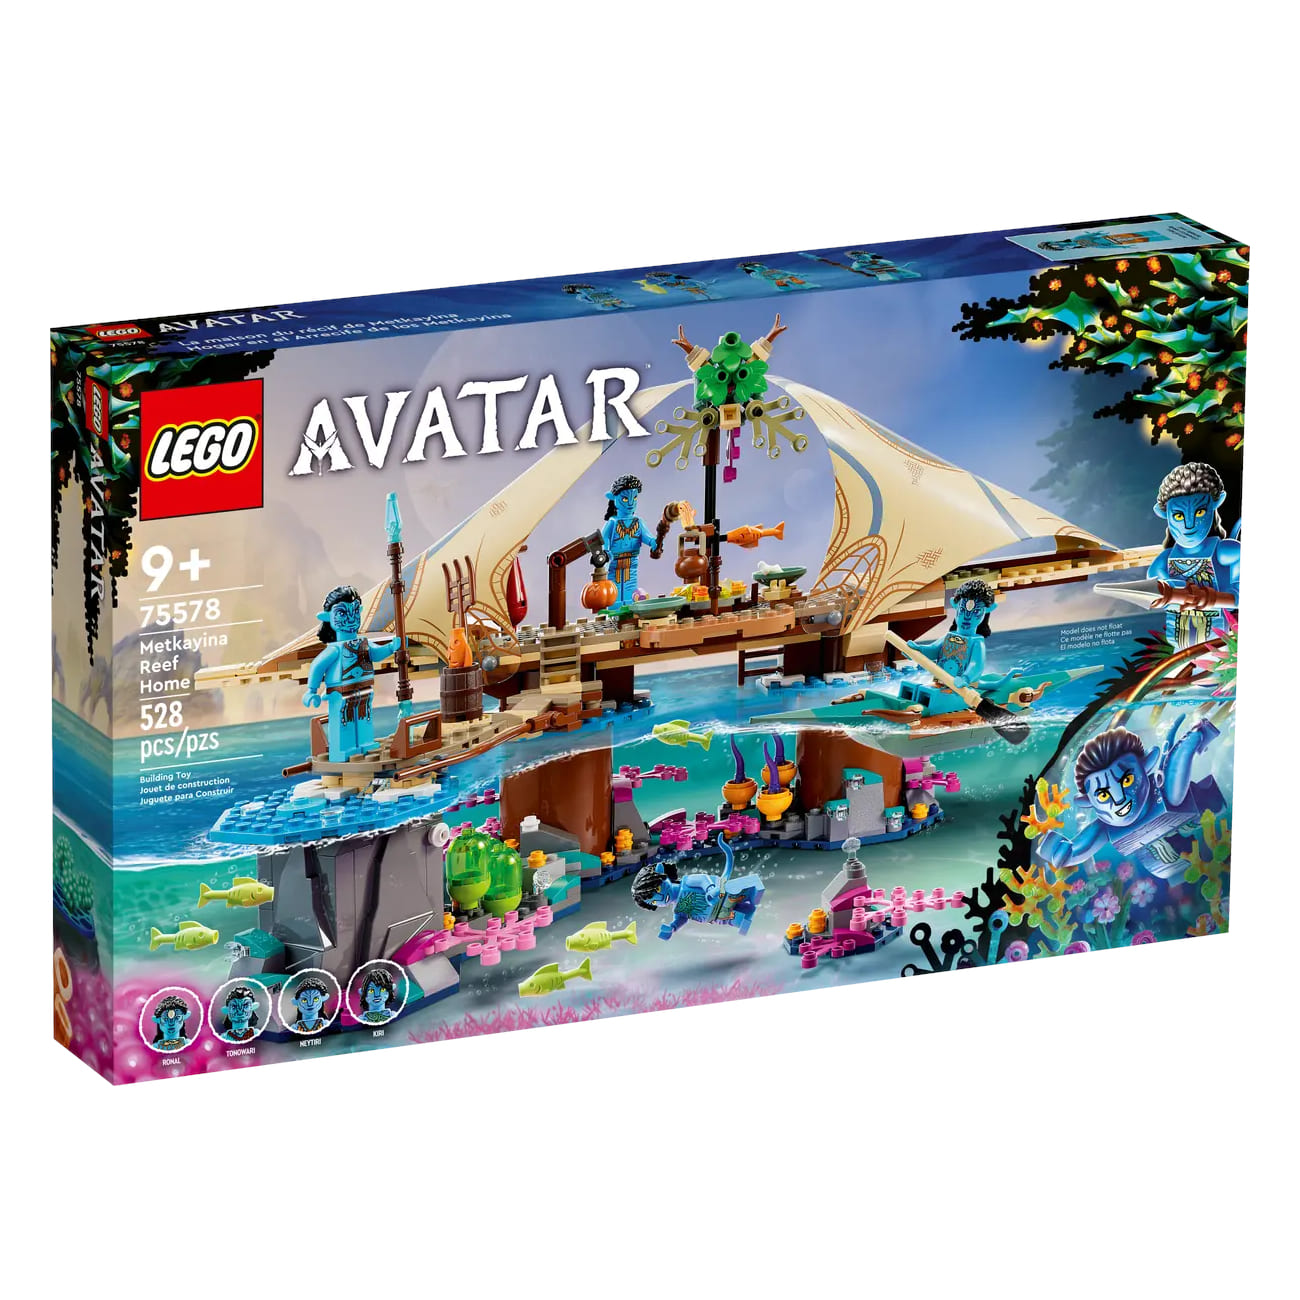 конструктор lego avatar дом меткайина на рифе 75578 Конструктор LEGO Avatar Metkayina Reef Home 75578, 528 деталей